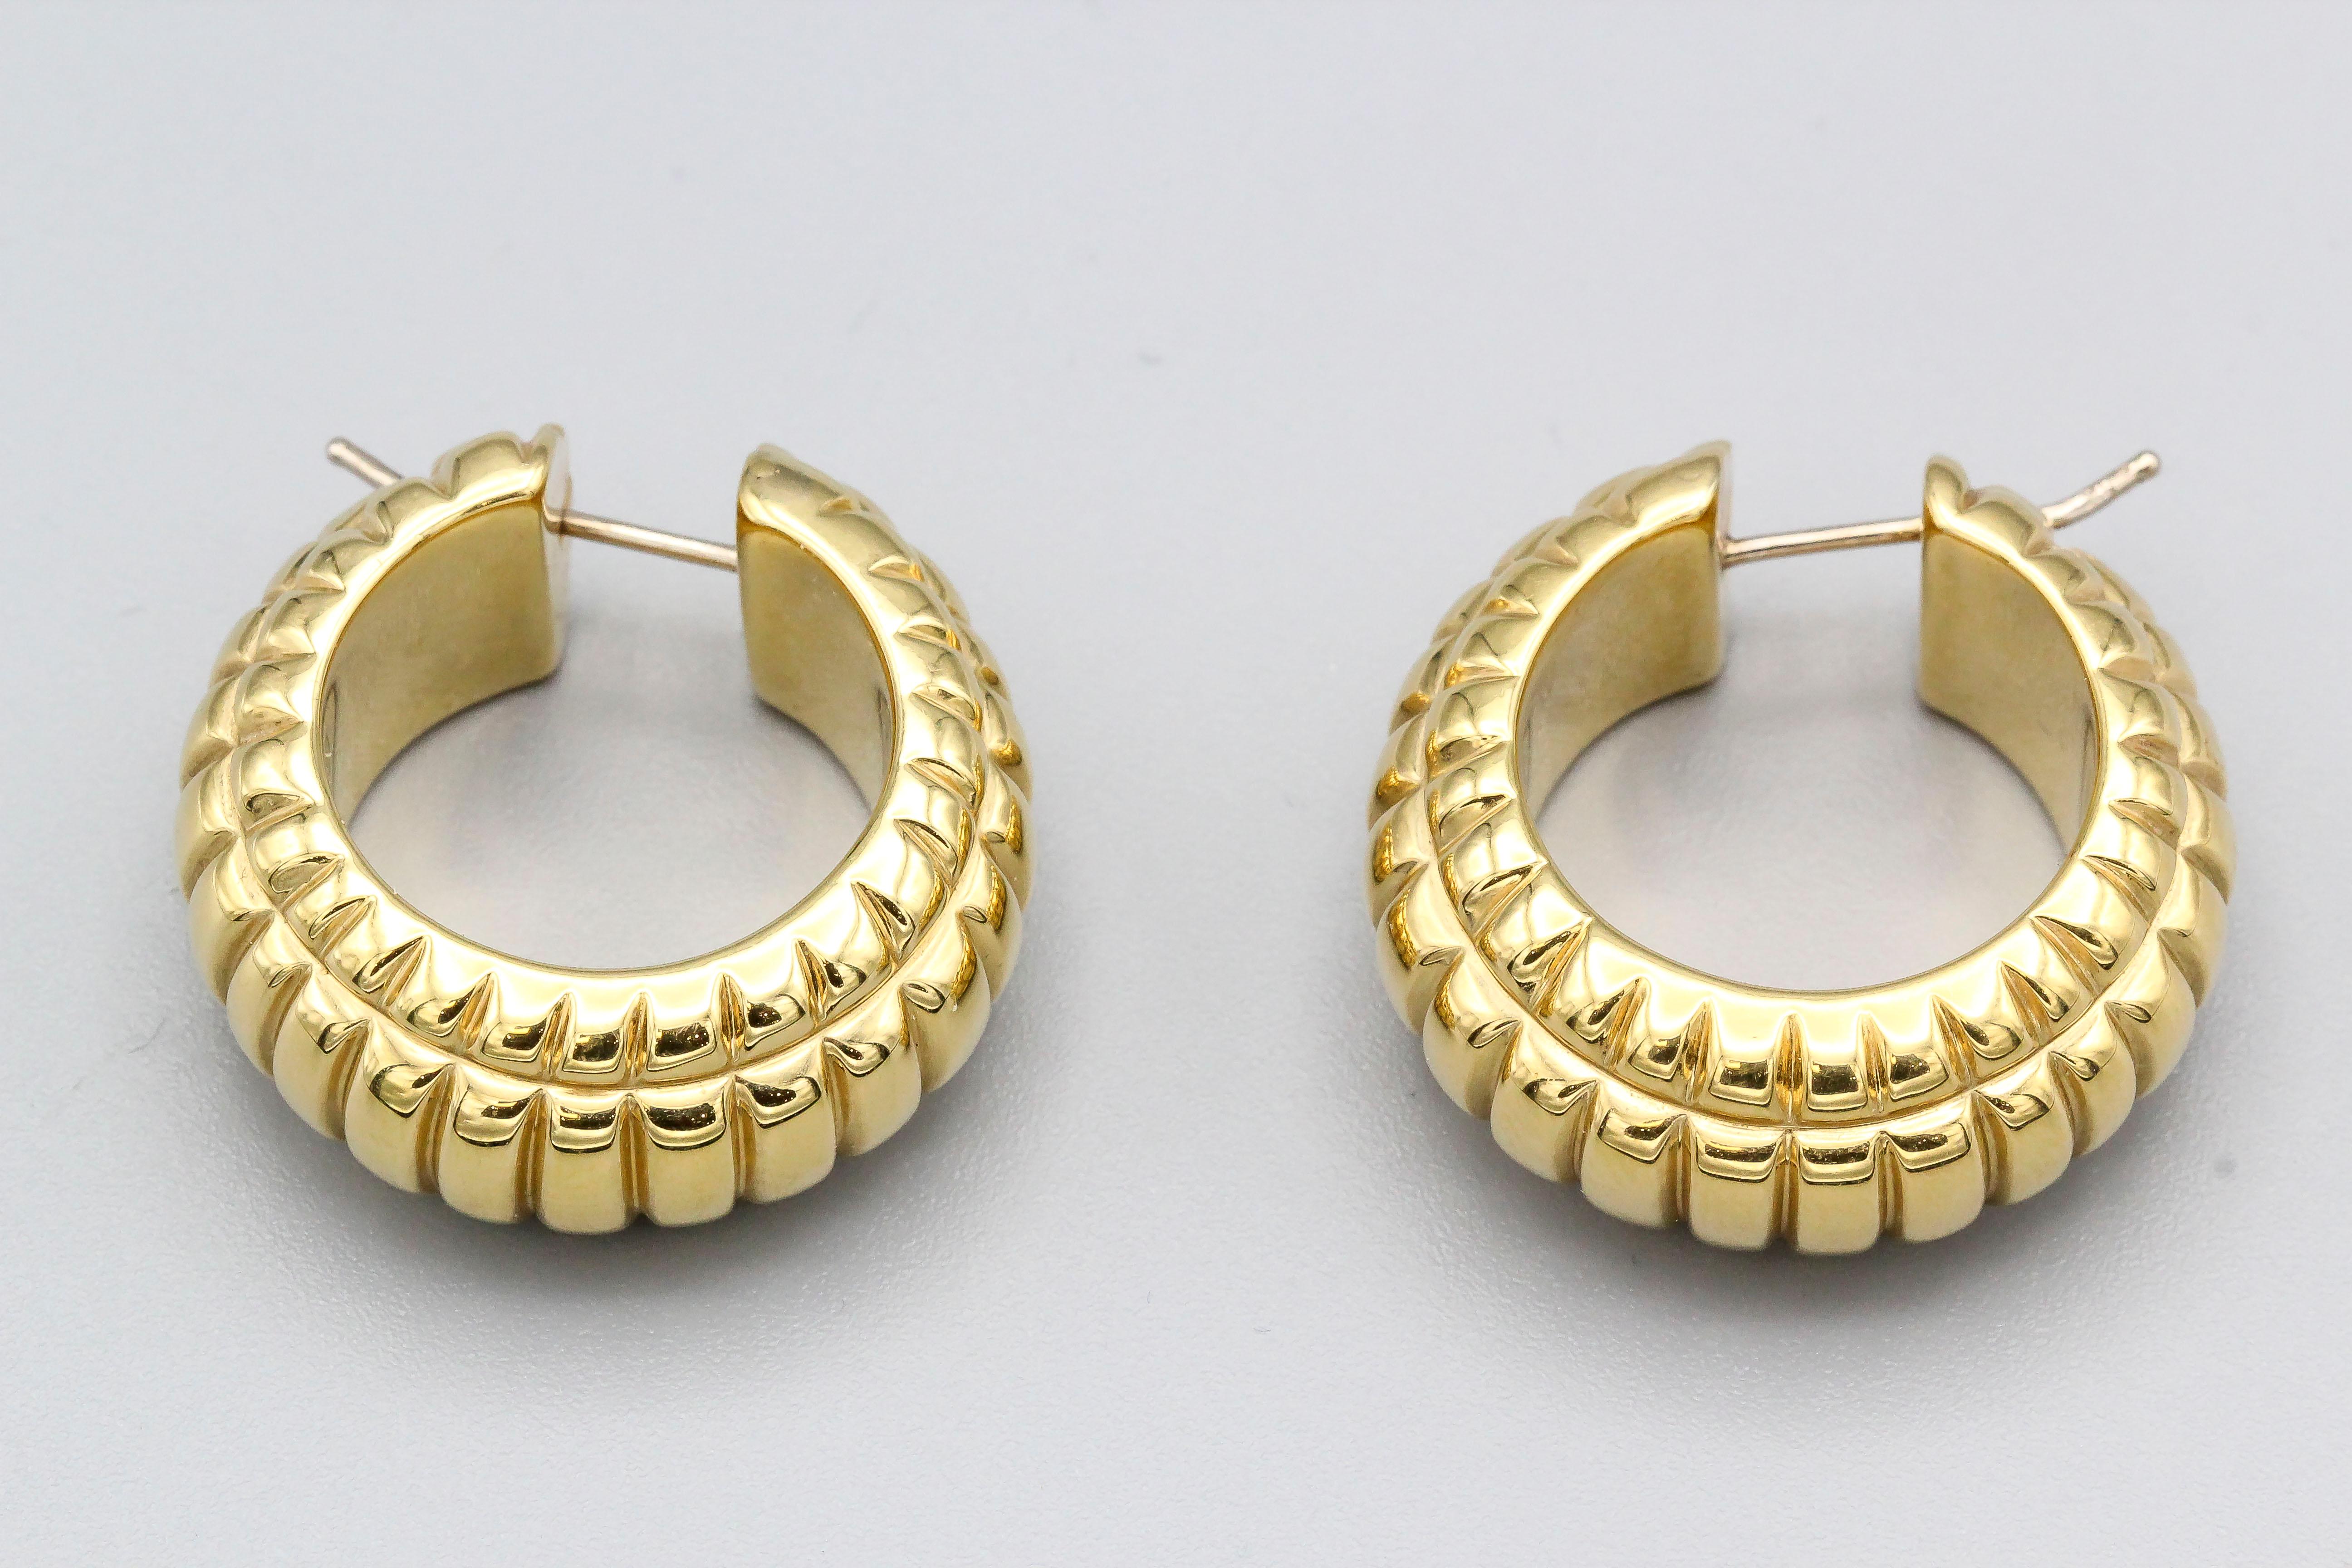 Elegant 18K yellow gold ridged hoop earrings.

Hallmarks: 750.
